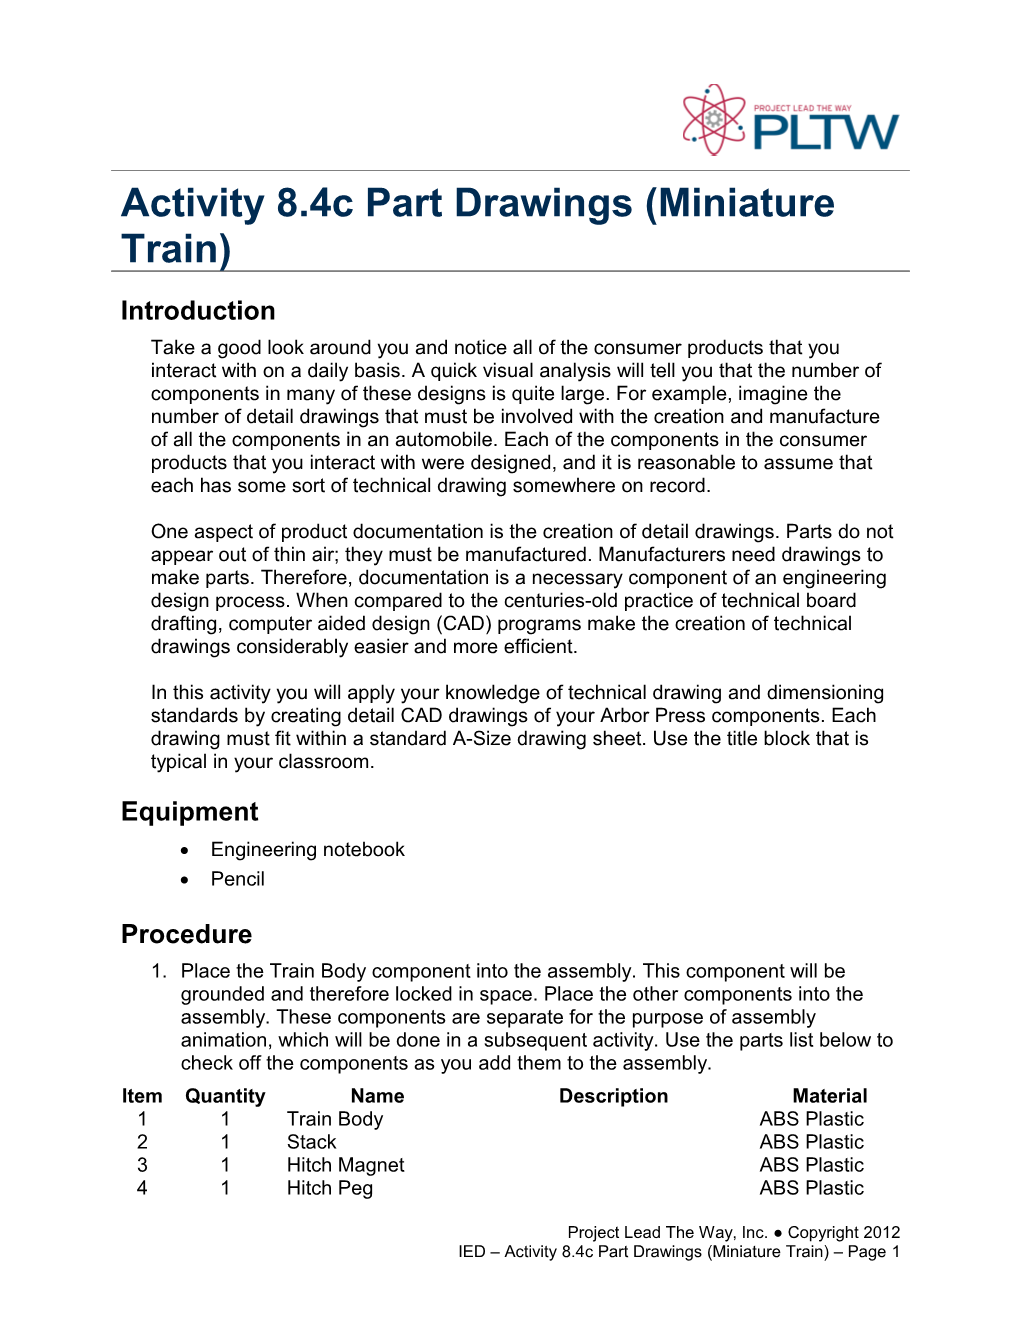 Activity 8.4C Part Drawings (Miniature Train)